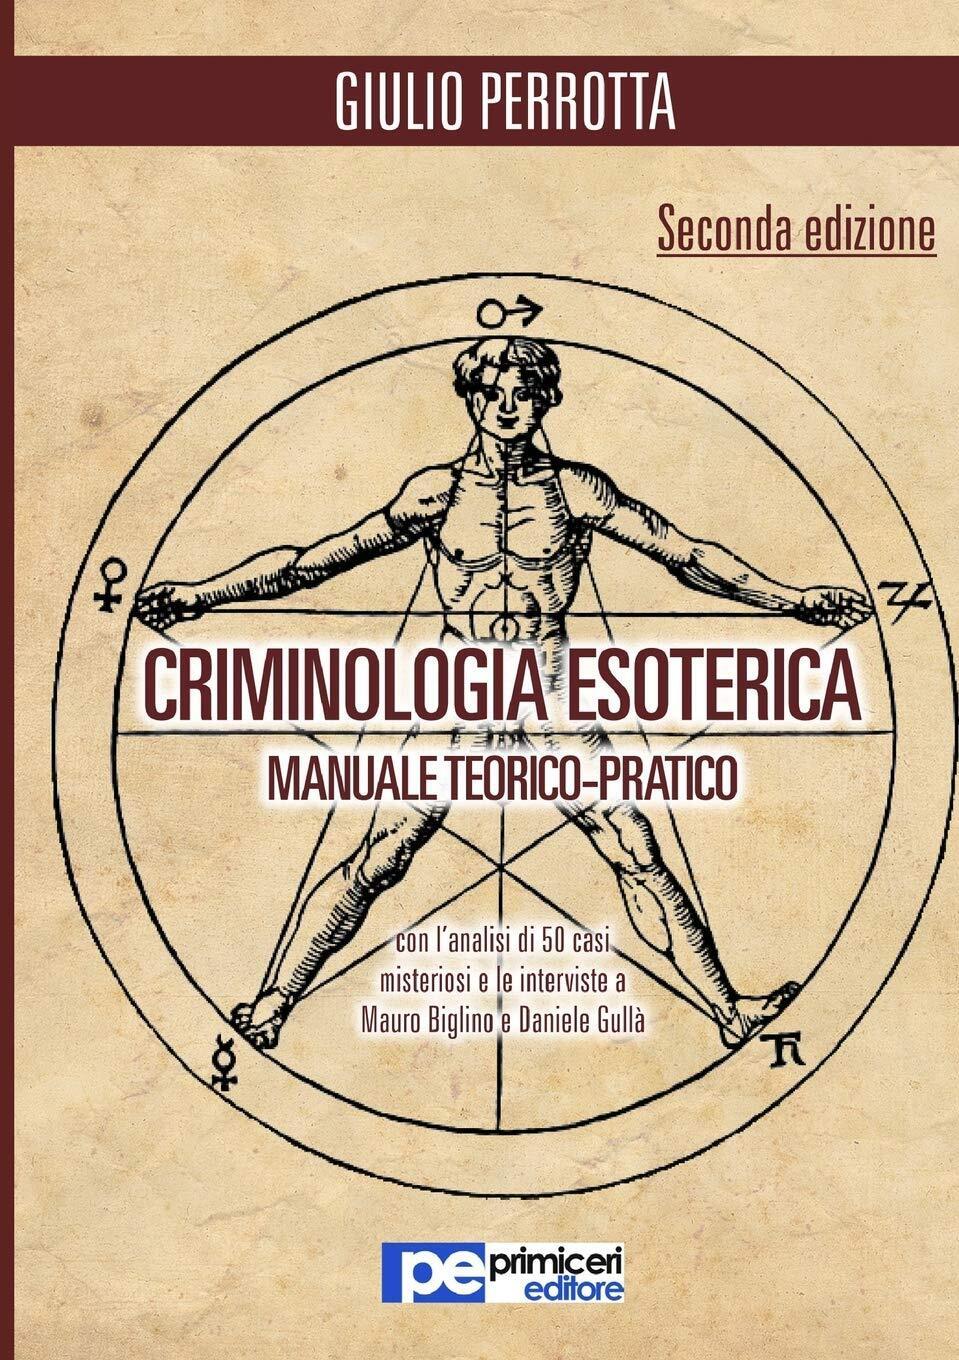 Criminologia esoterica - Giulio Perrotta - Primiceri, 2016 